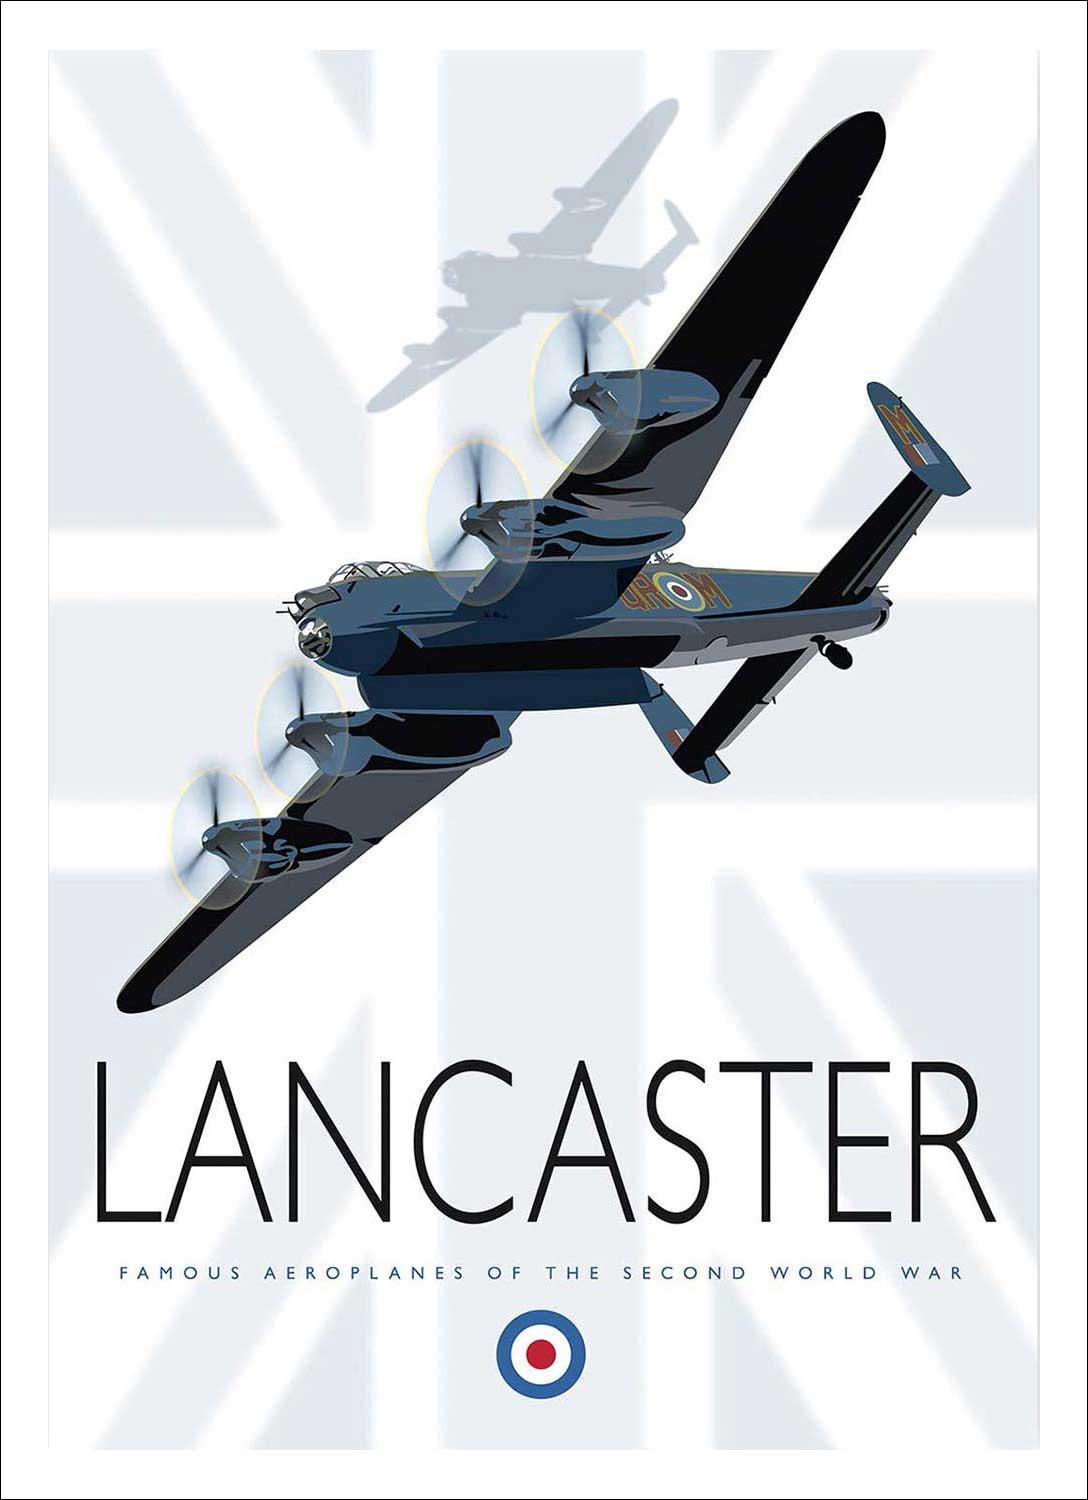 Lancaster Art Print from an original illustration by artist Peter McDermott